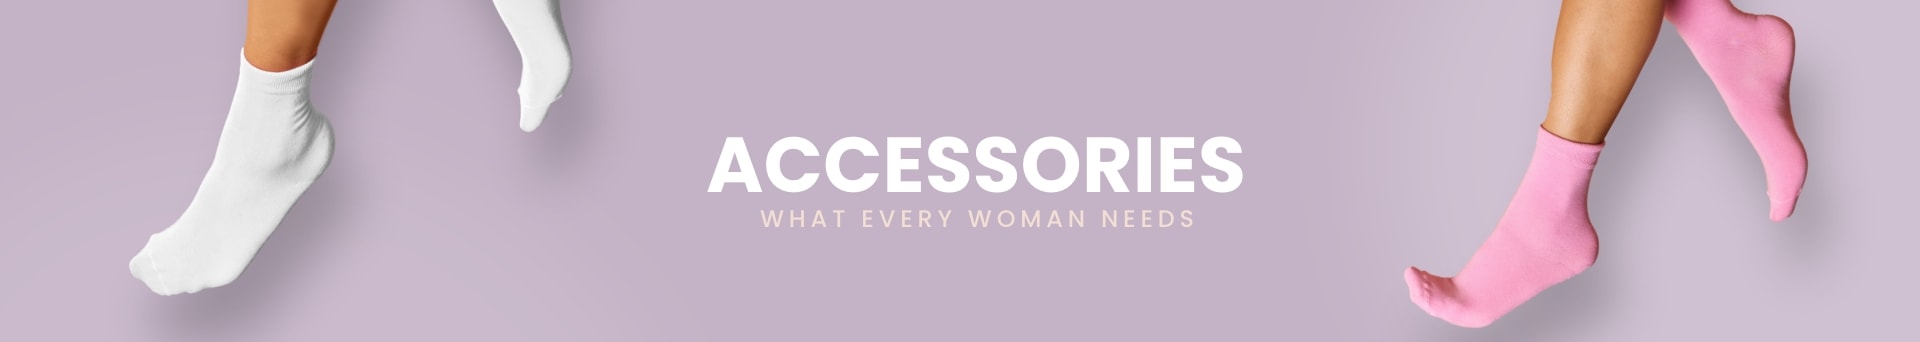 Ladies Accessories Collection Banner - Desktop